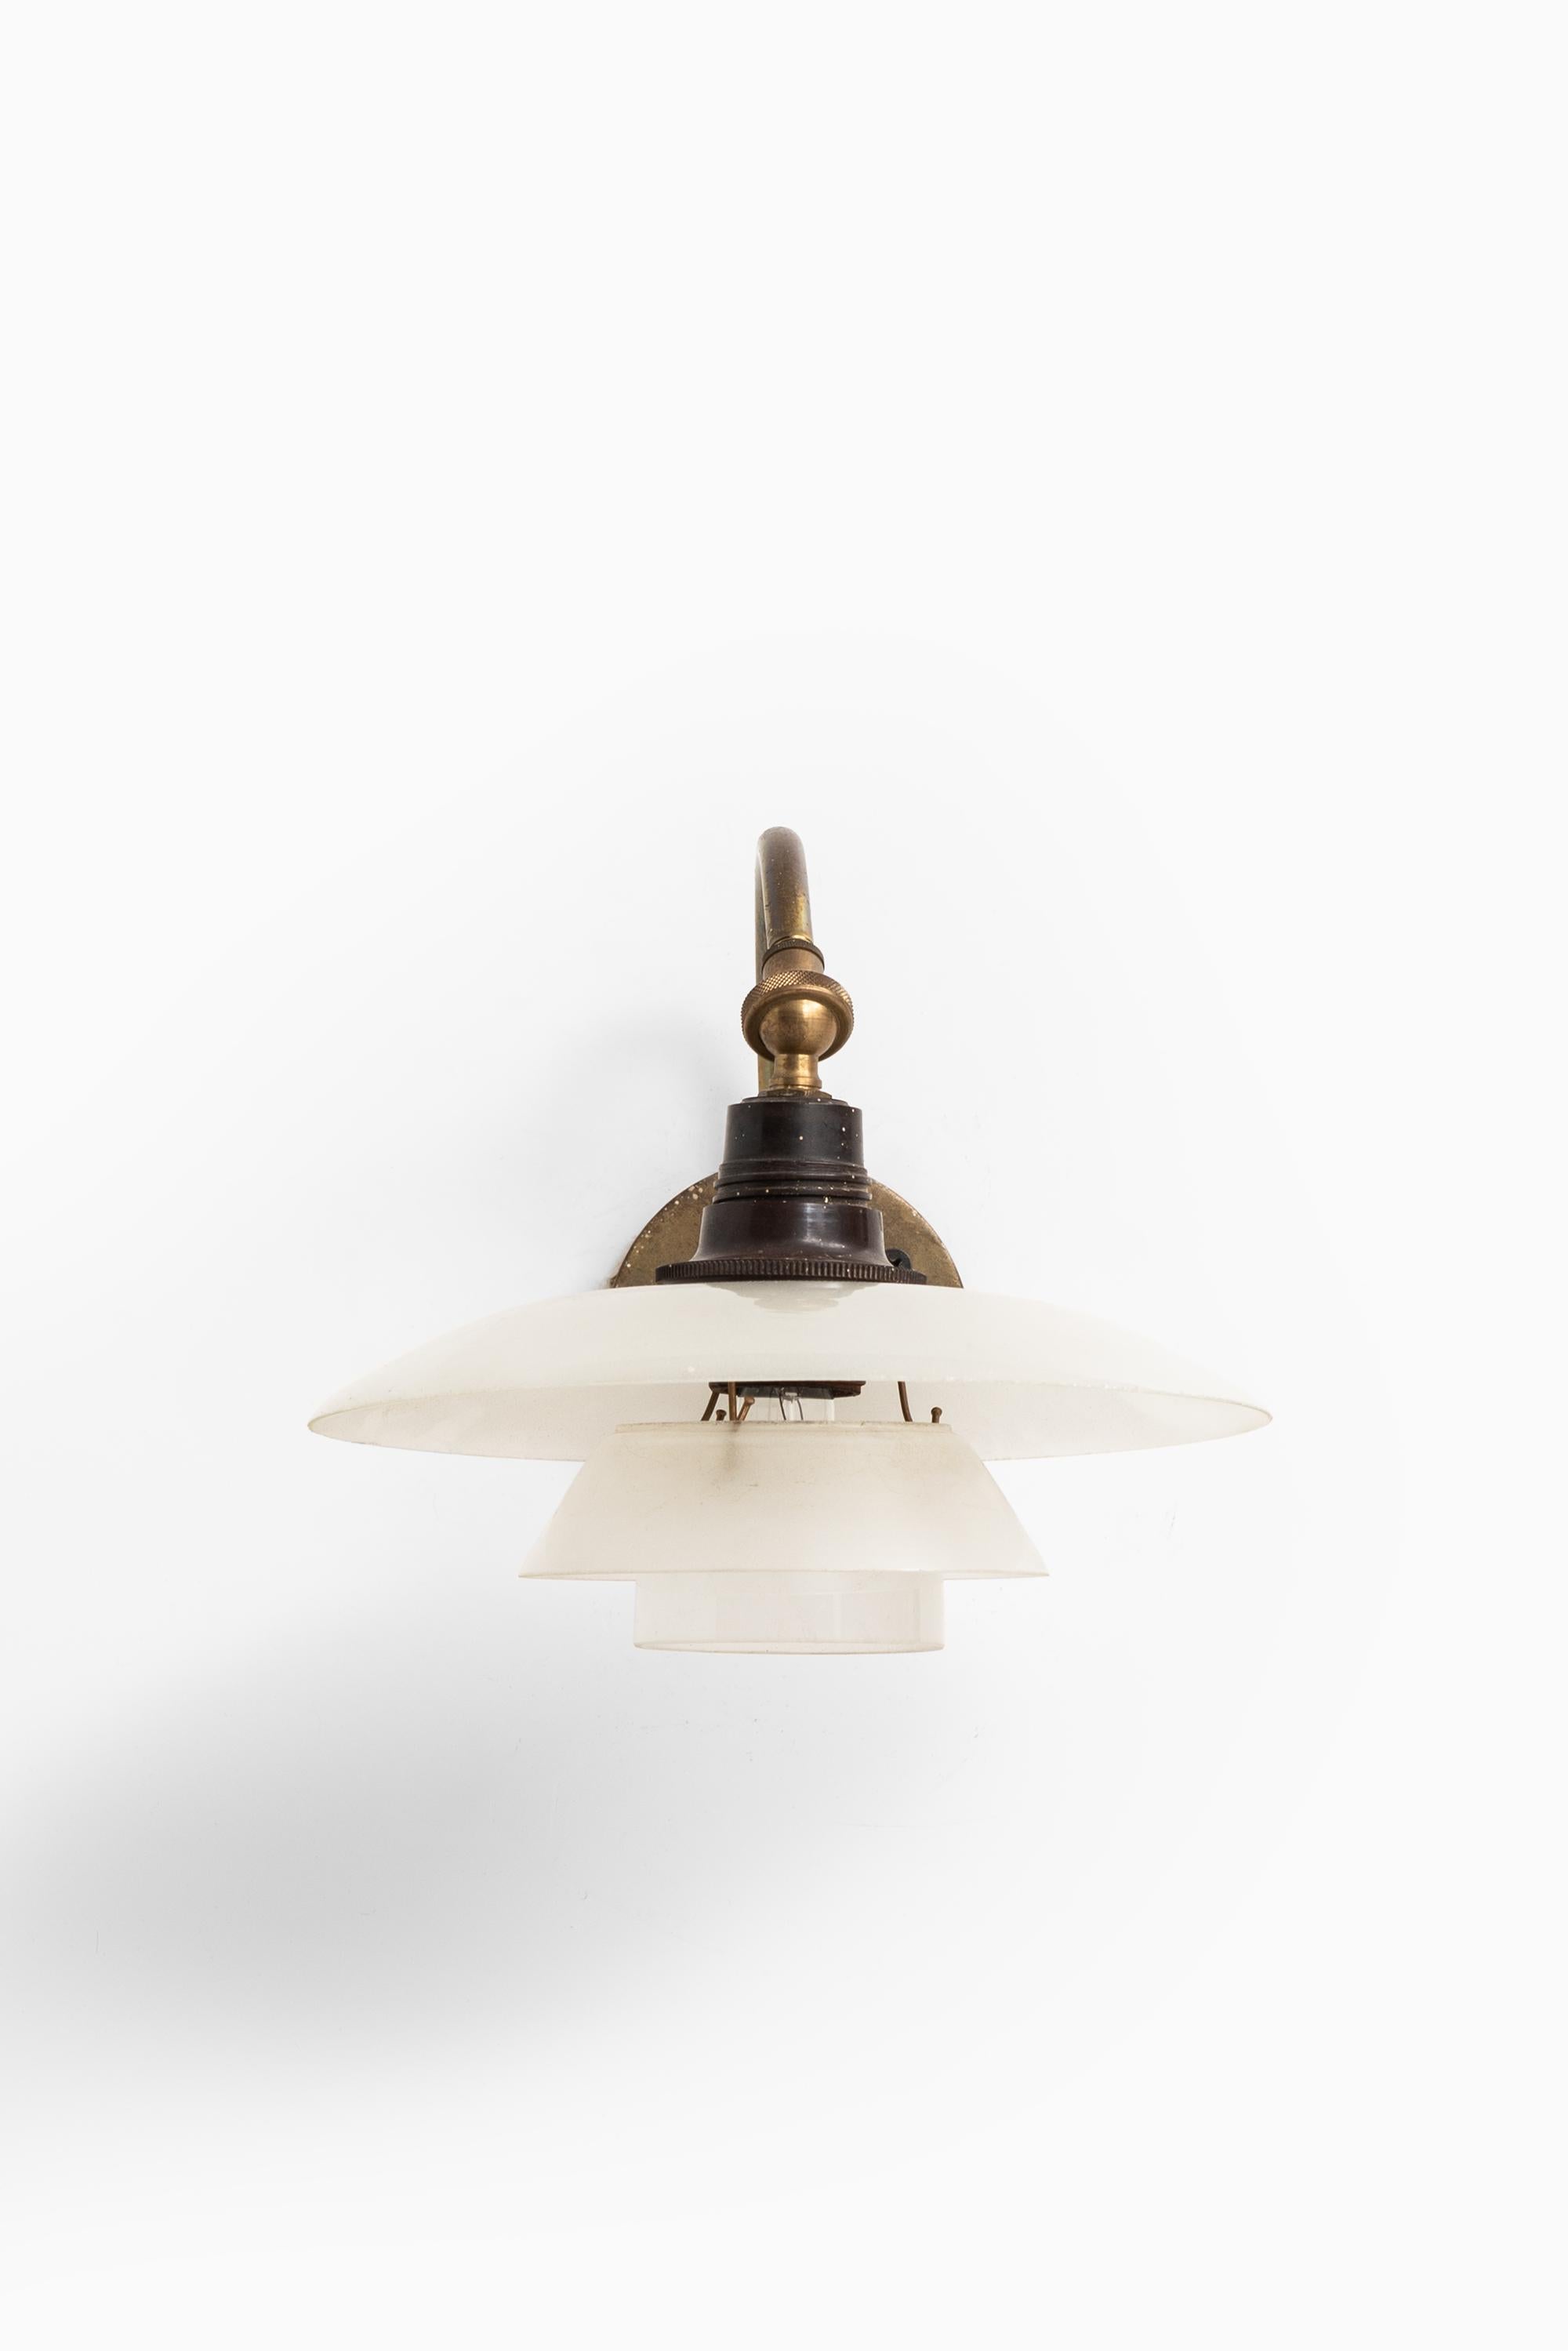 Rara lampada da parete modello PH-1/1 disegnata da Poul Henningsen. Prodotto da Louis Poulsen in Danimarca.